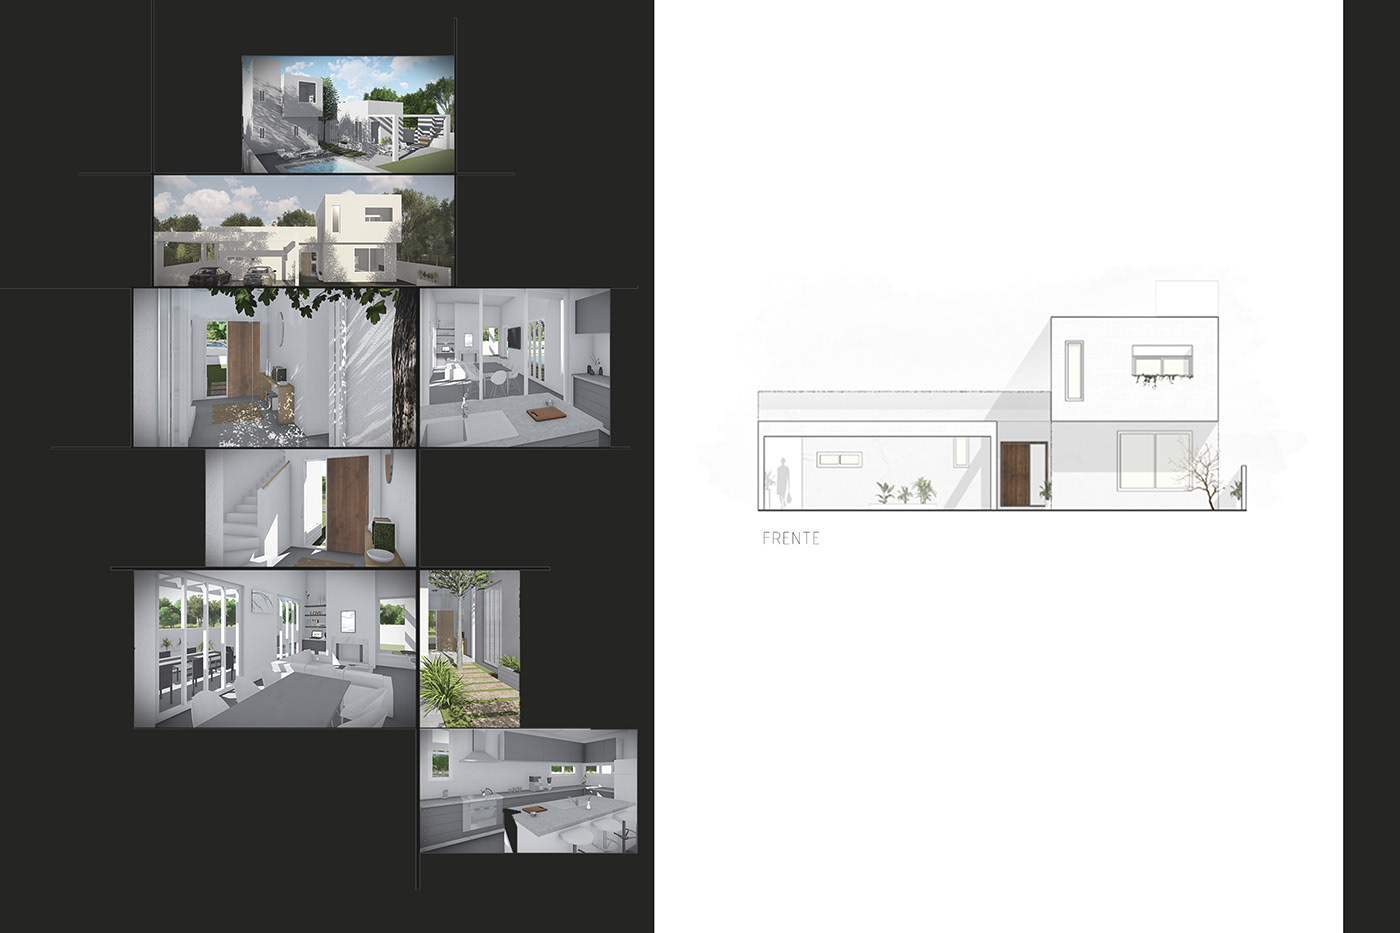 arquitectura architecture Render visualization 3D exterior modern ArchiCAD lumion photoshop